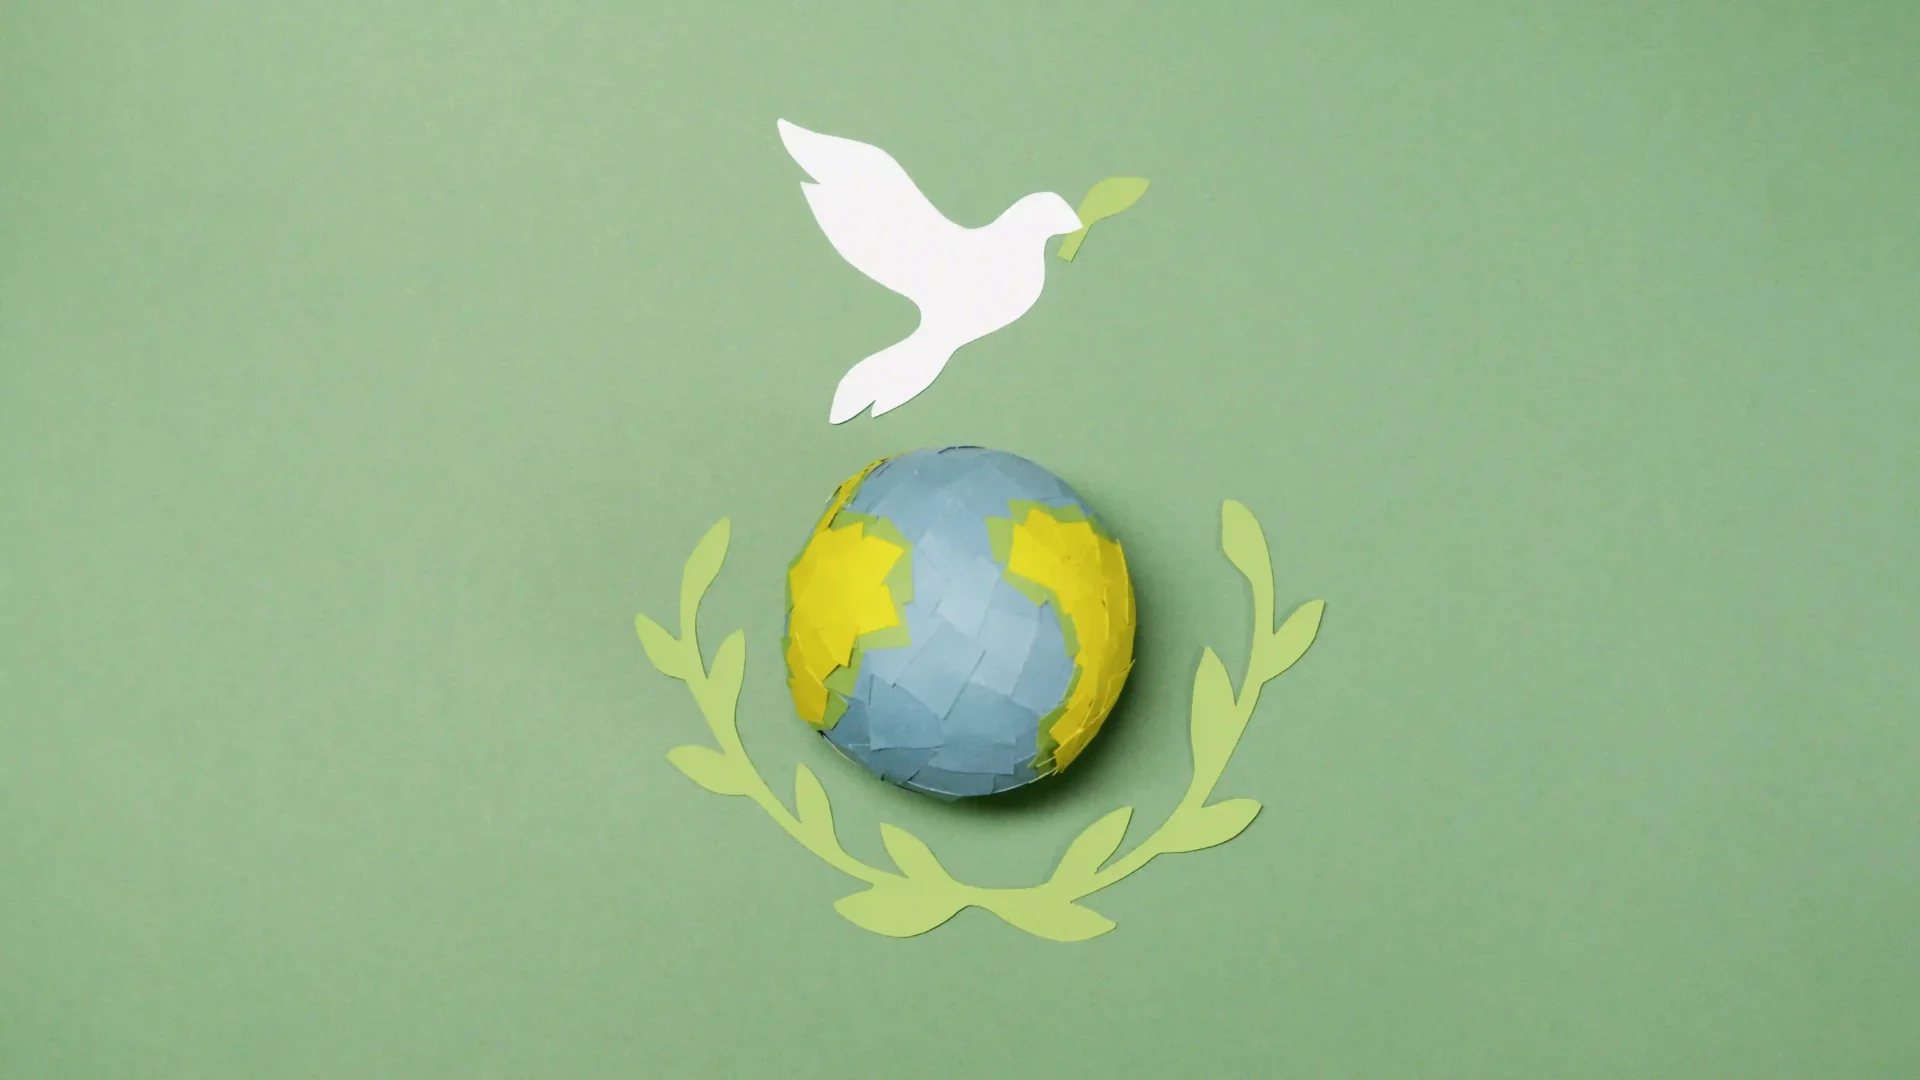 A DIY paper earth globe.